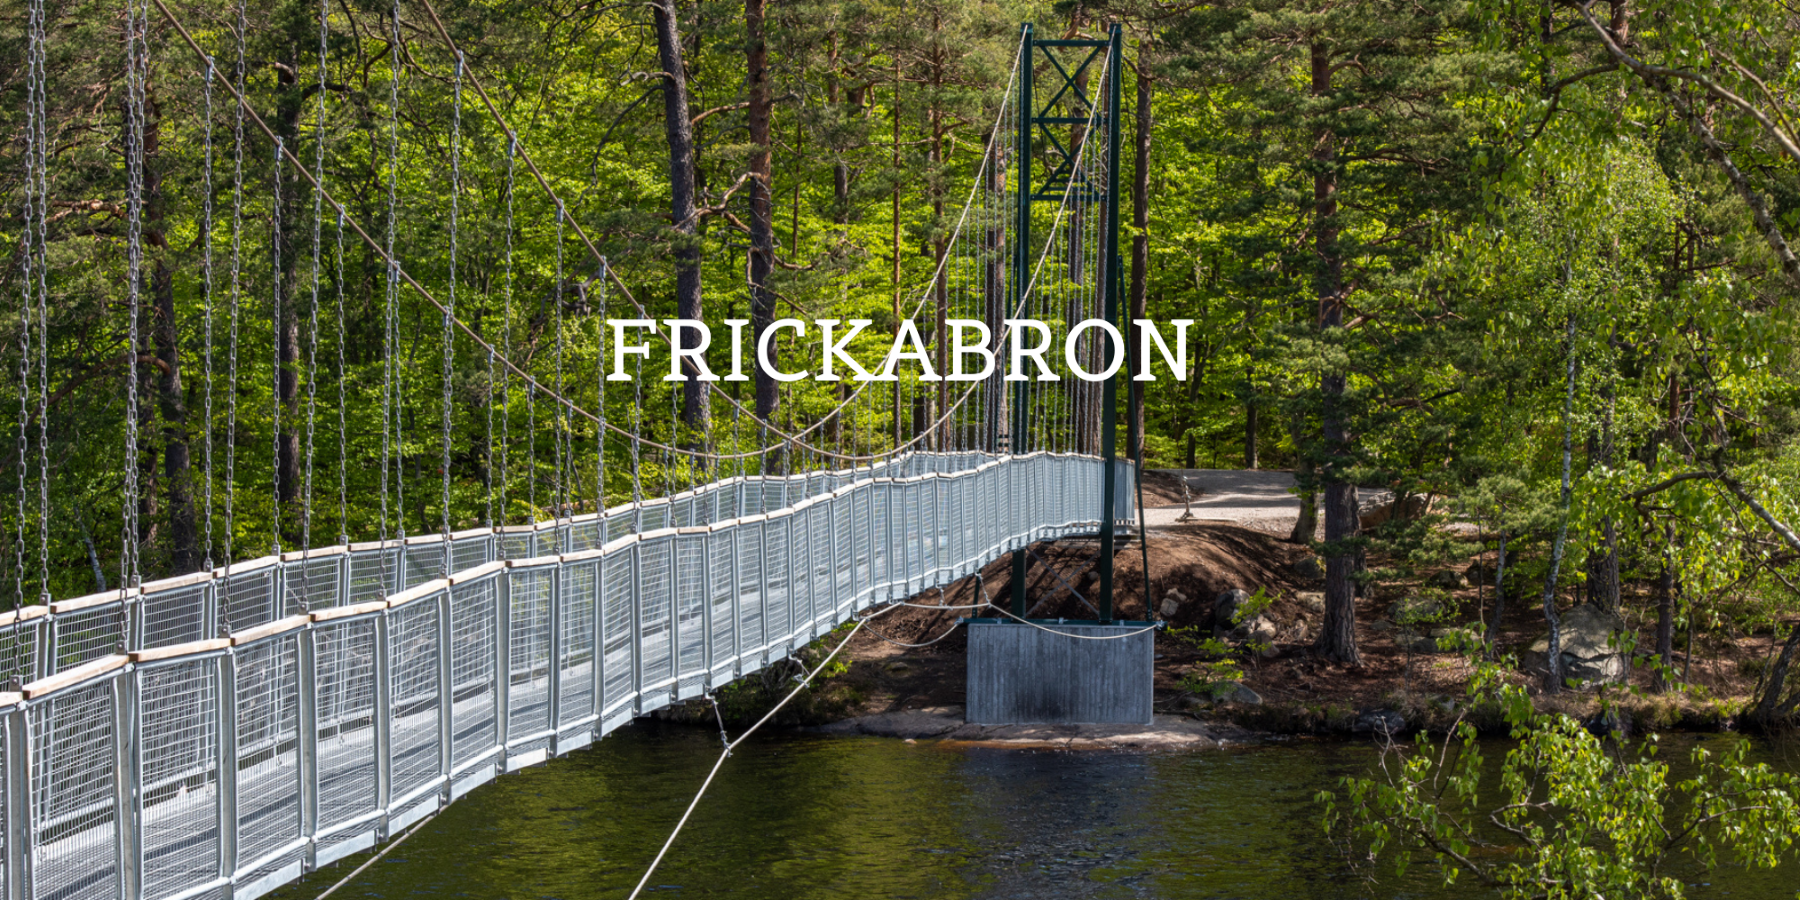 Frickabron | Visit Blekinge